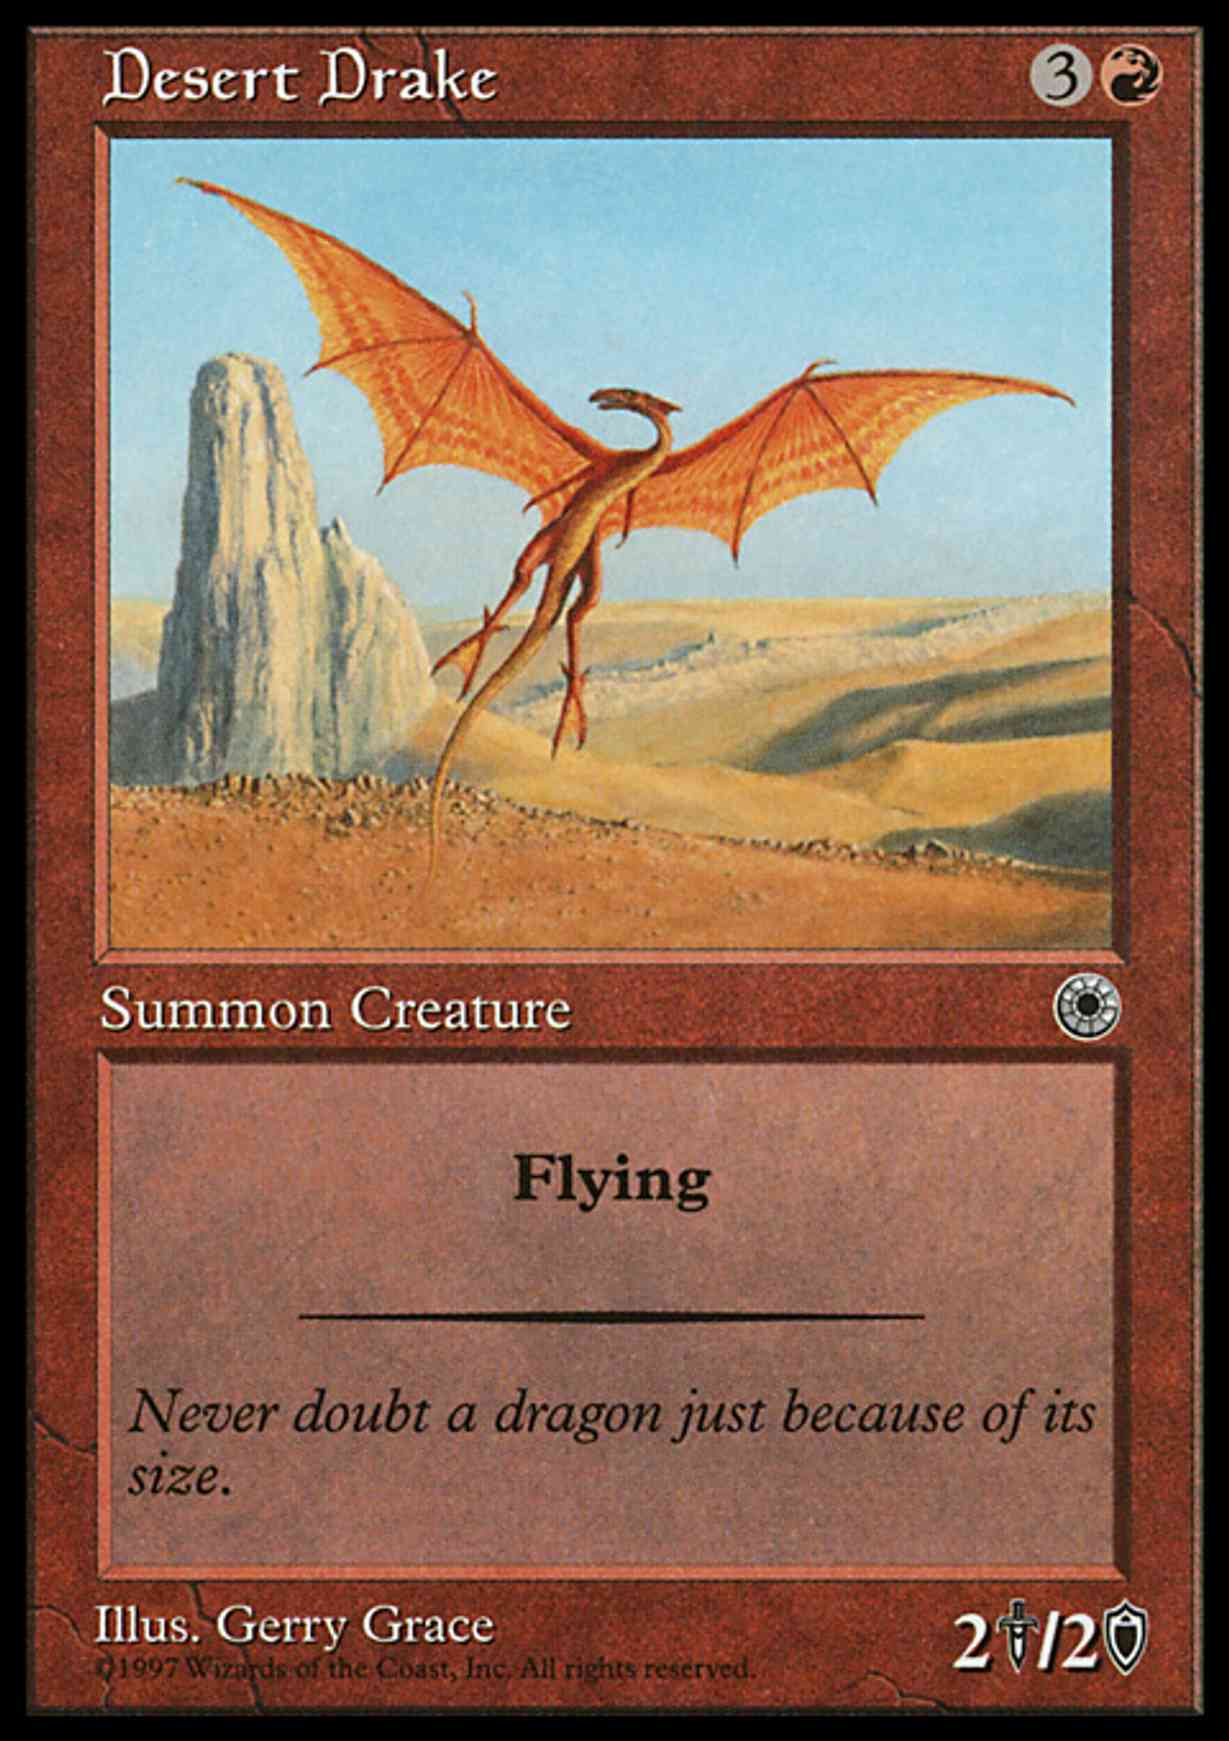 Desert Drake magic card front